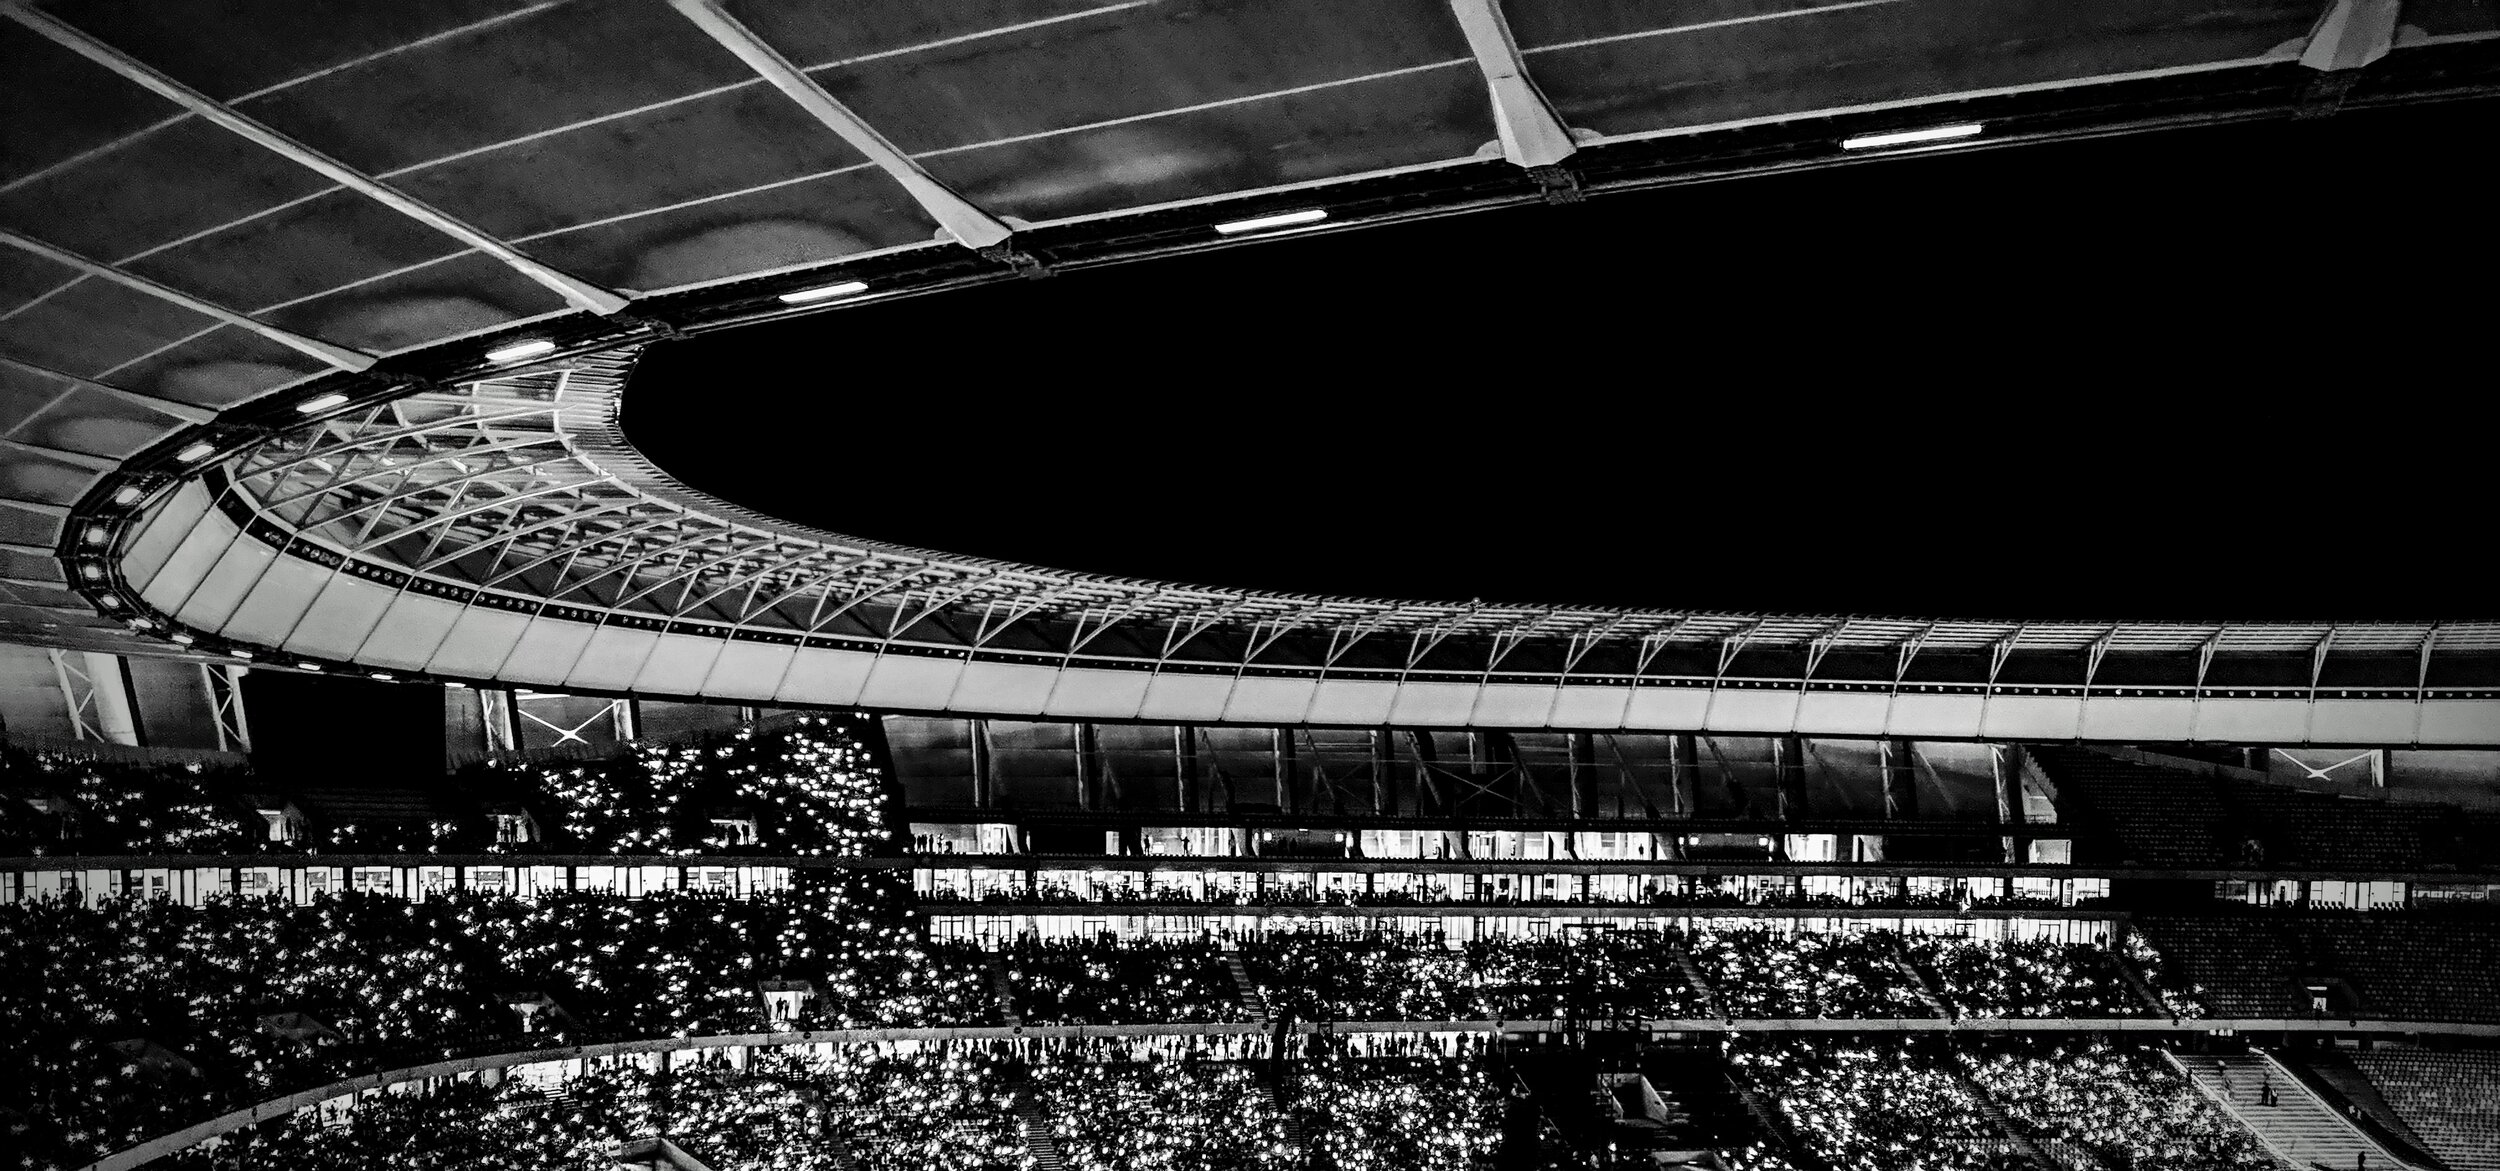 Cape Town Stadium, South Africa, 2019